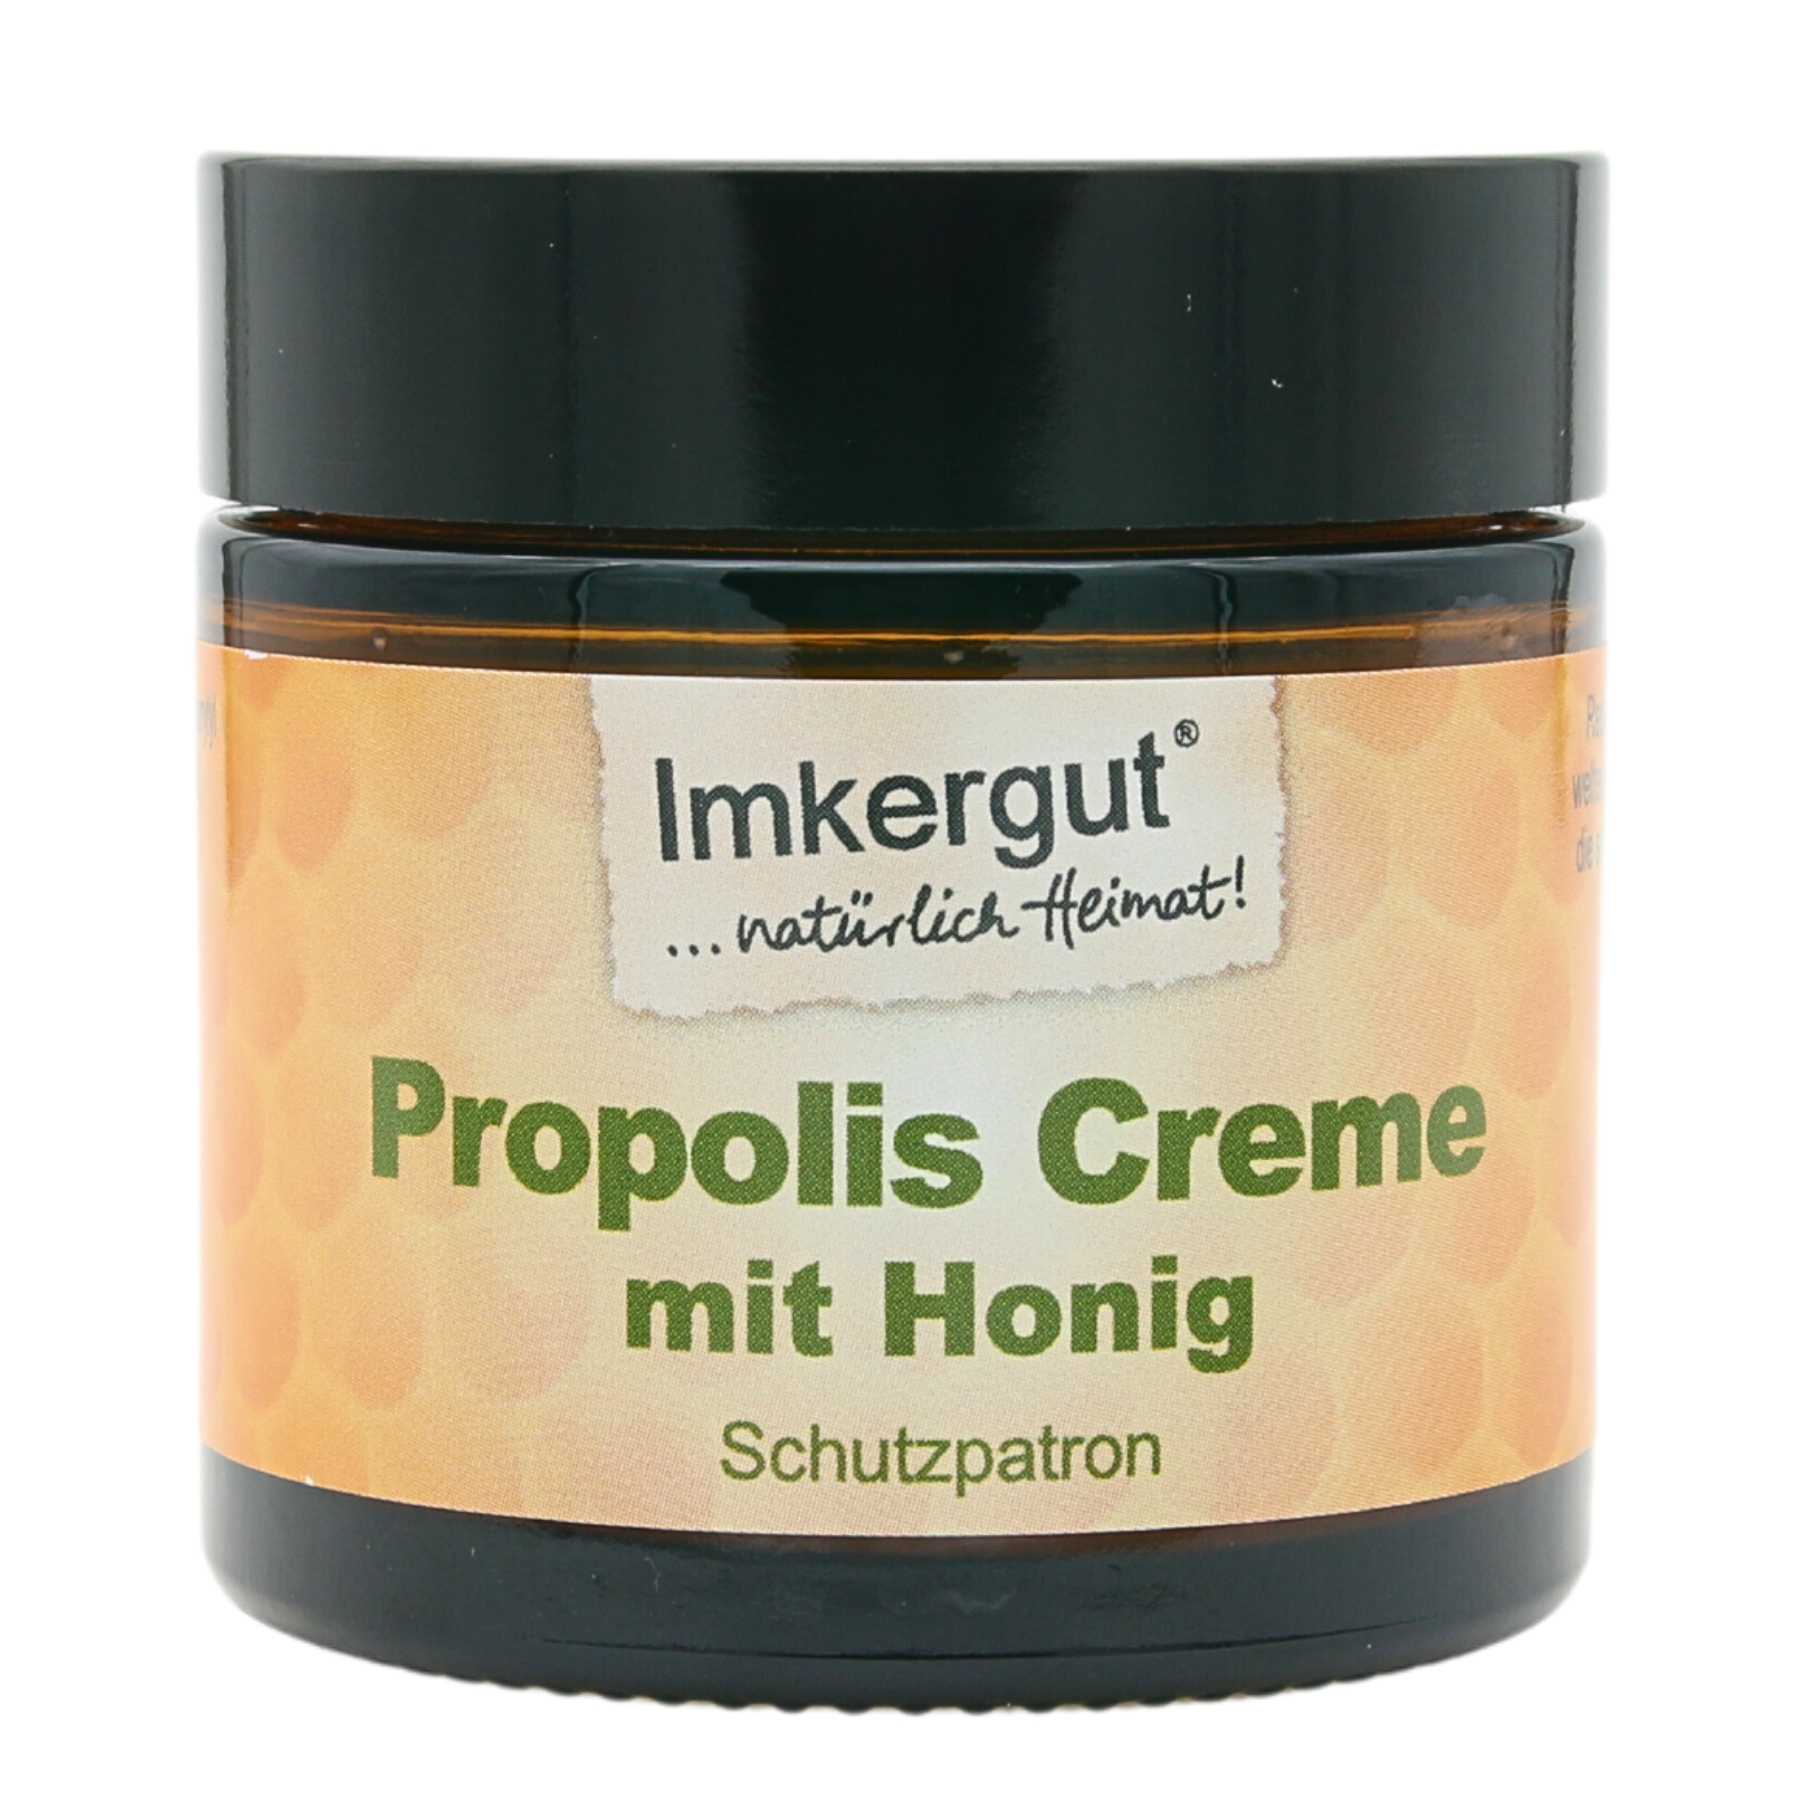 Propolis Creme mit Honig 50ml Tiegel